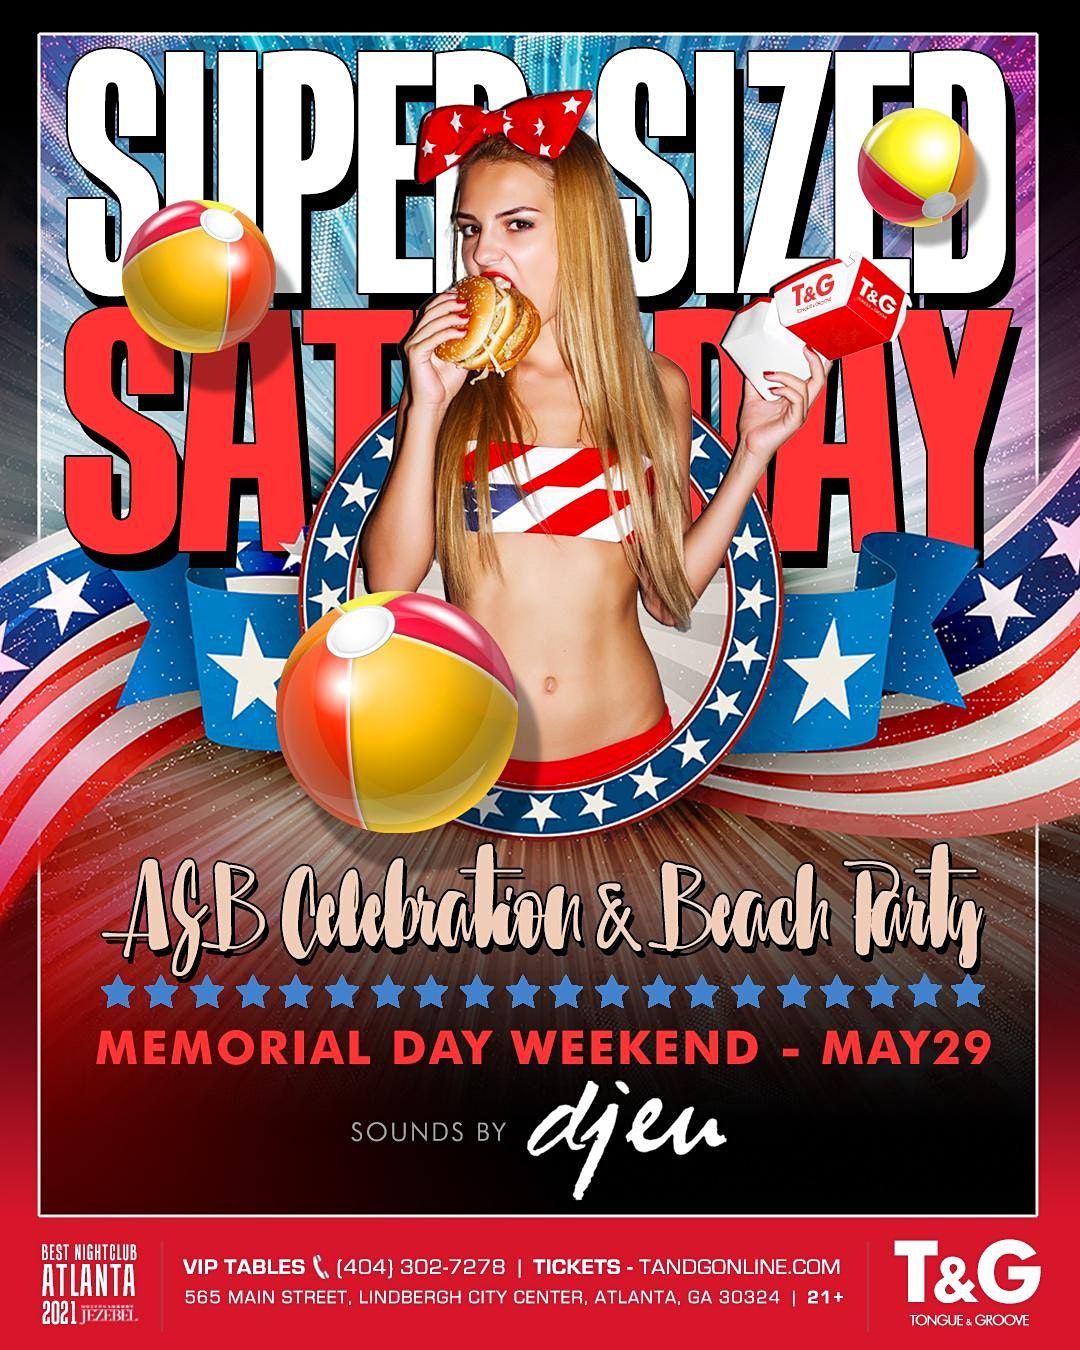 SUPER-Sized Saturday - ASB Celebration and Beach Party with DJ EU!